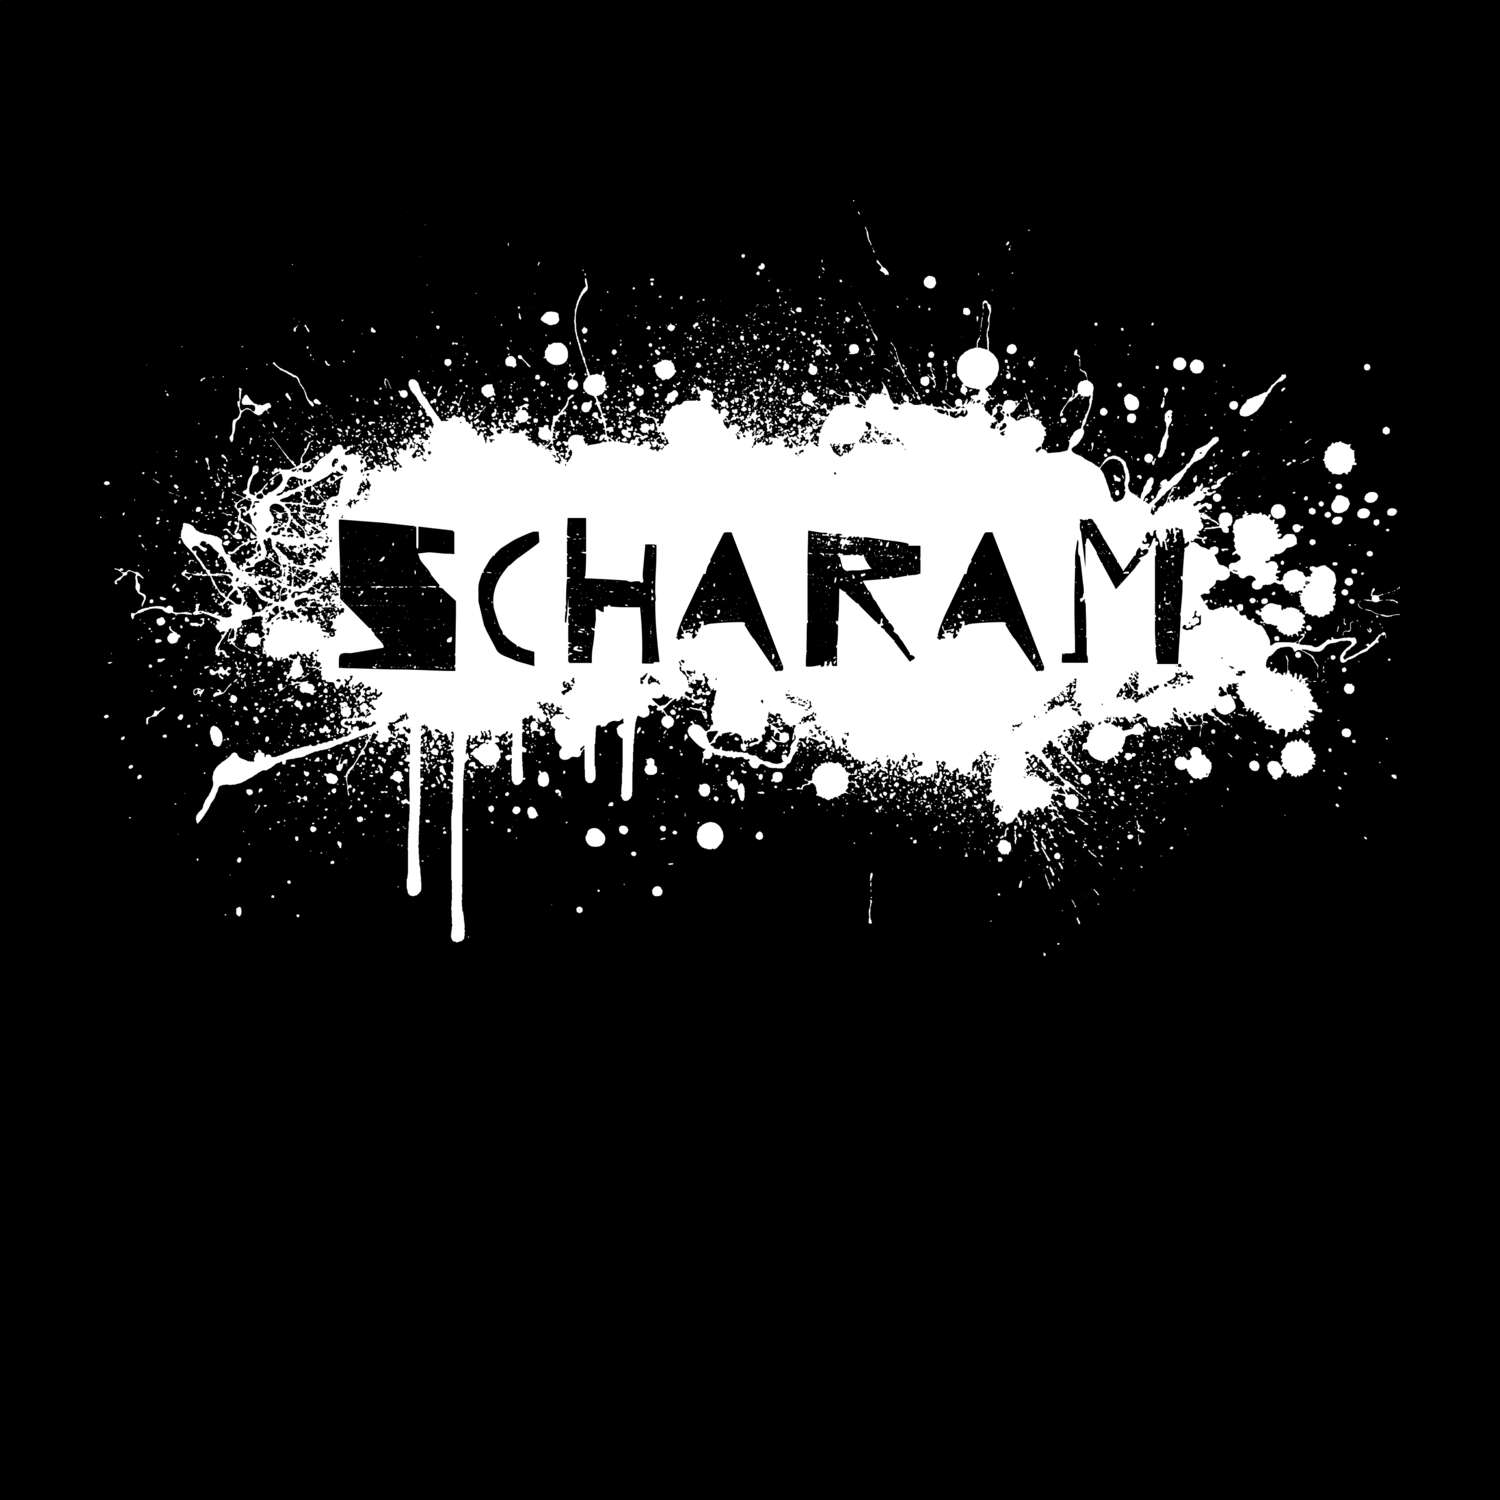 Scharam T-Shirt »Paint Splash Punk«